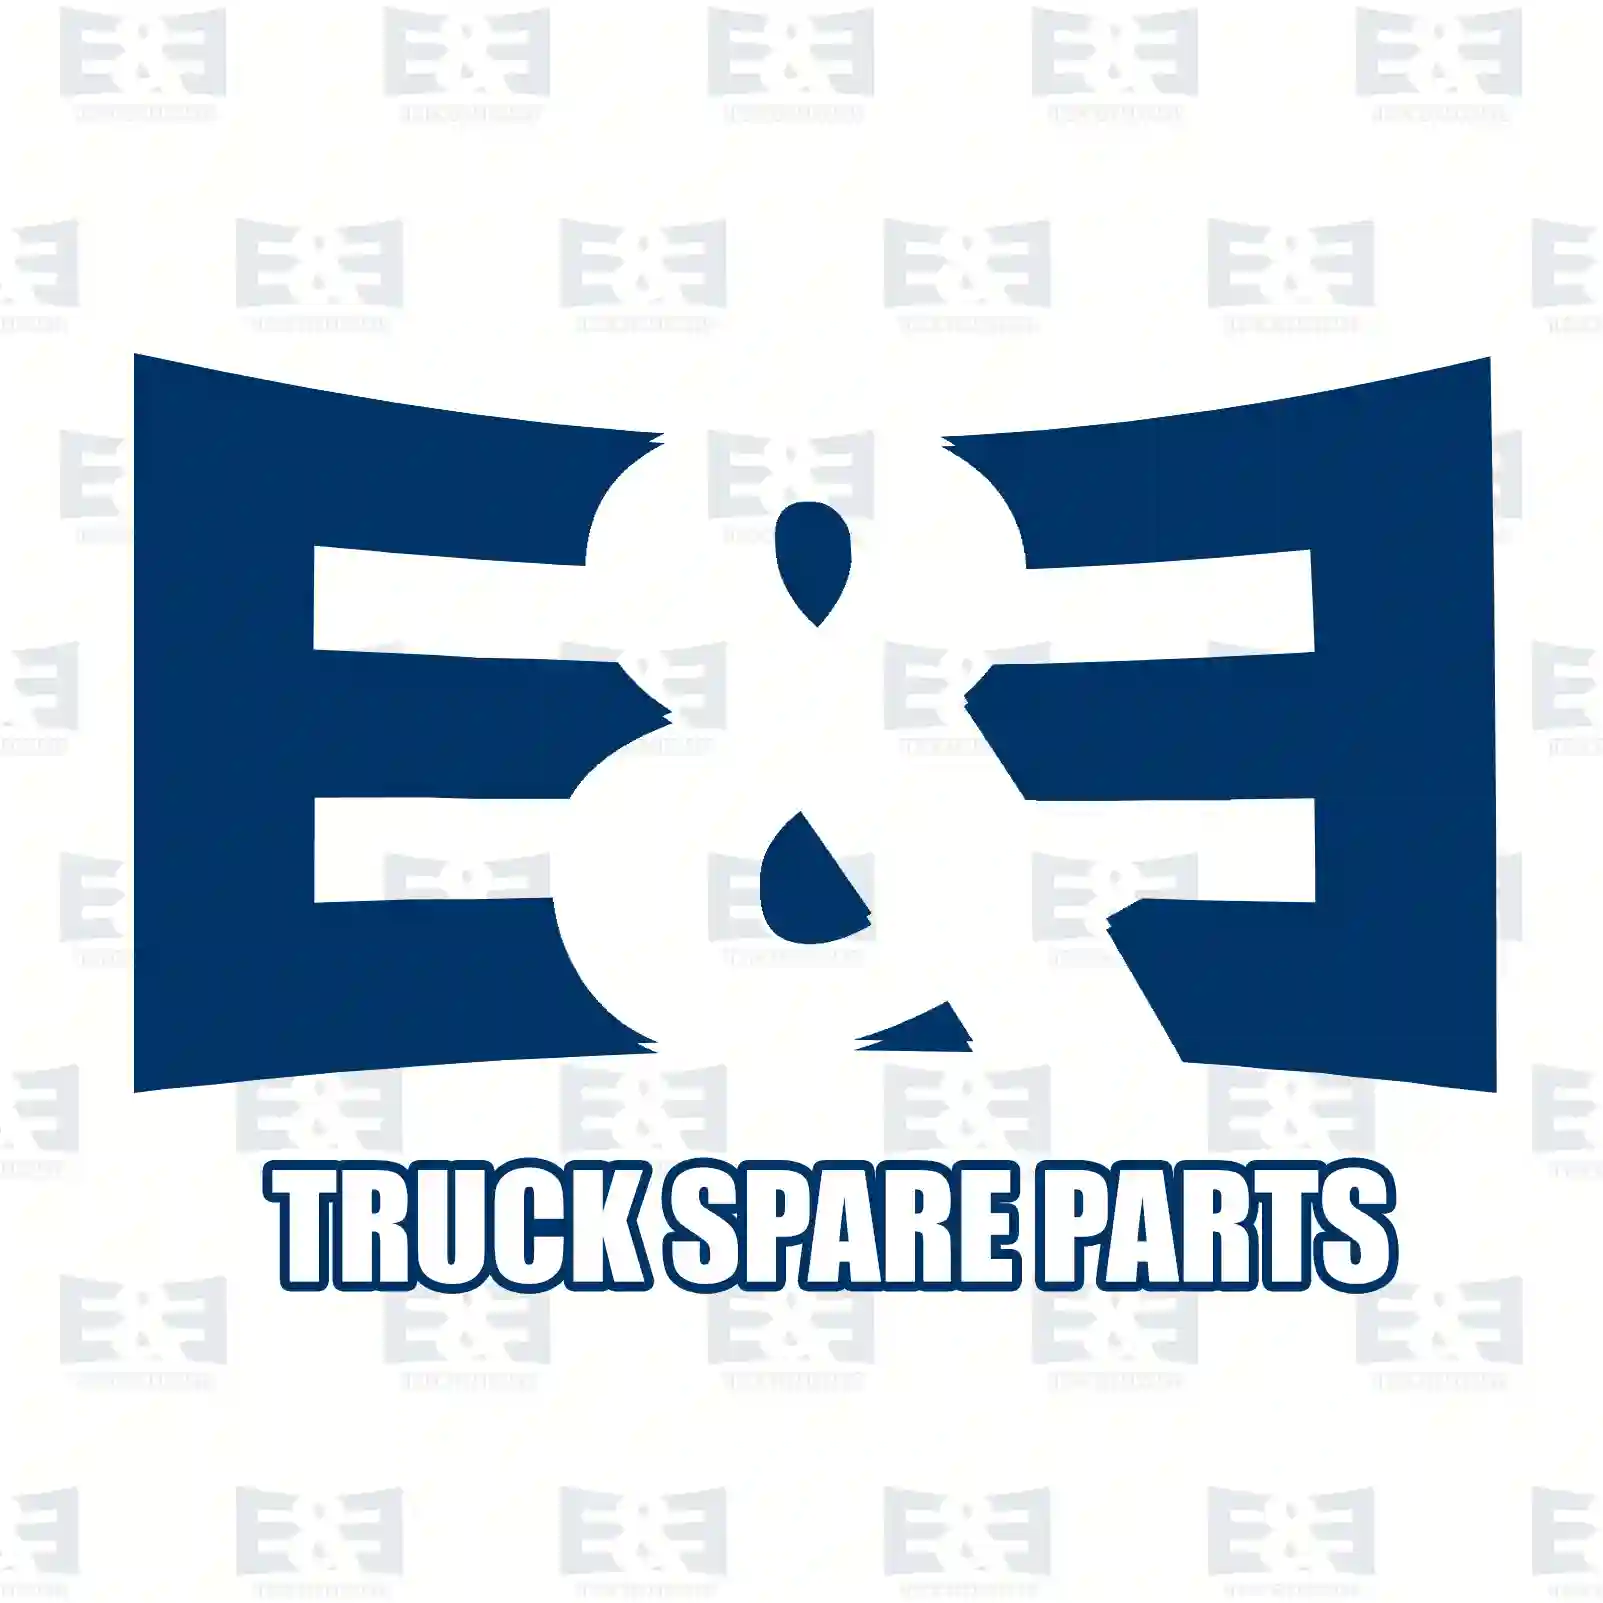 Bleeder valve, retarder, 2E2277879, 7403092597, 30925 ||  2E2277879 E&E Truck Spare Parts | Truck Spare Parts, Auotomotive Spare Parts Bleeder valve, retarder, 2E2277879, 7403092597, 30925 ||  2E2277879 E&E Truck Spare Parts | Truck Spare Parts, Auotomotive Spare Parts